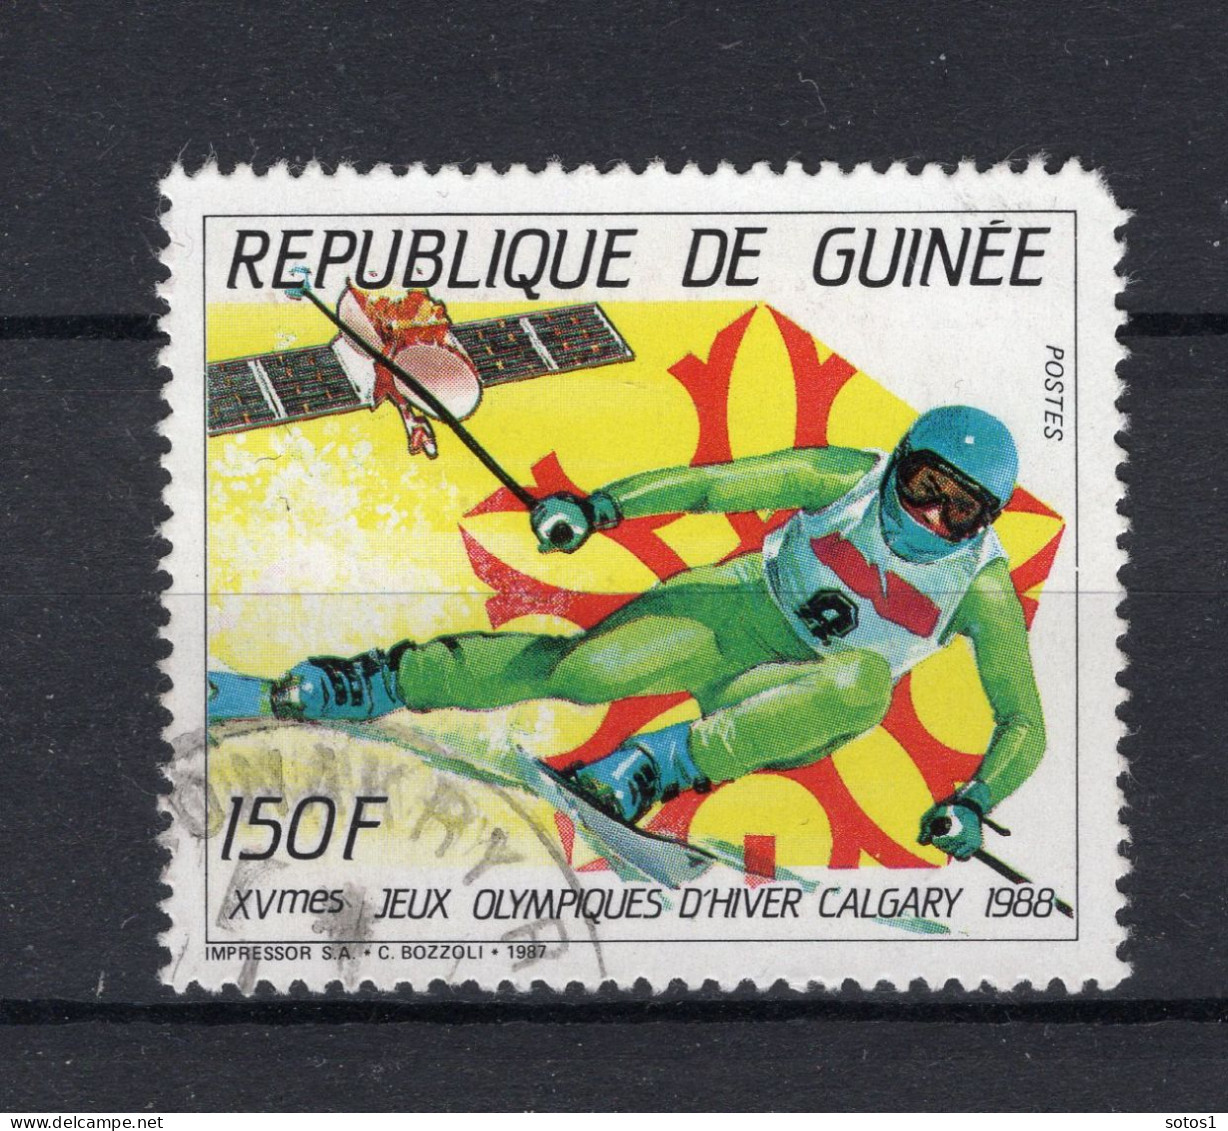 GUINEE REP. Yt. 824° Gestempeld 1987 - Guinea (1958-...)